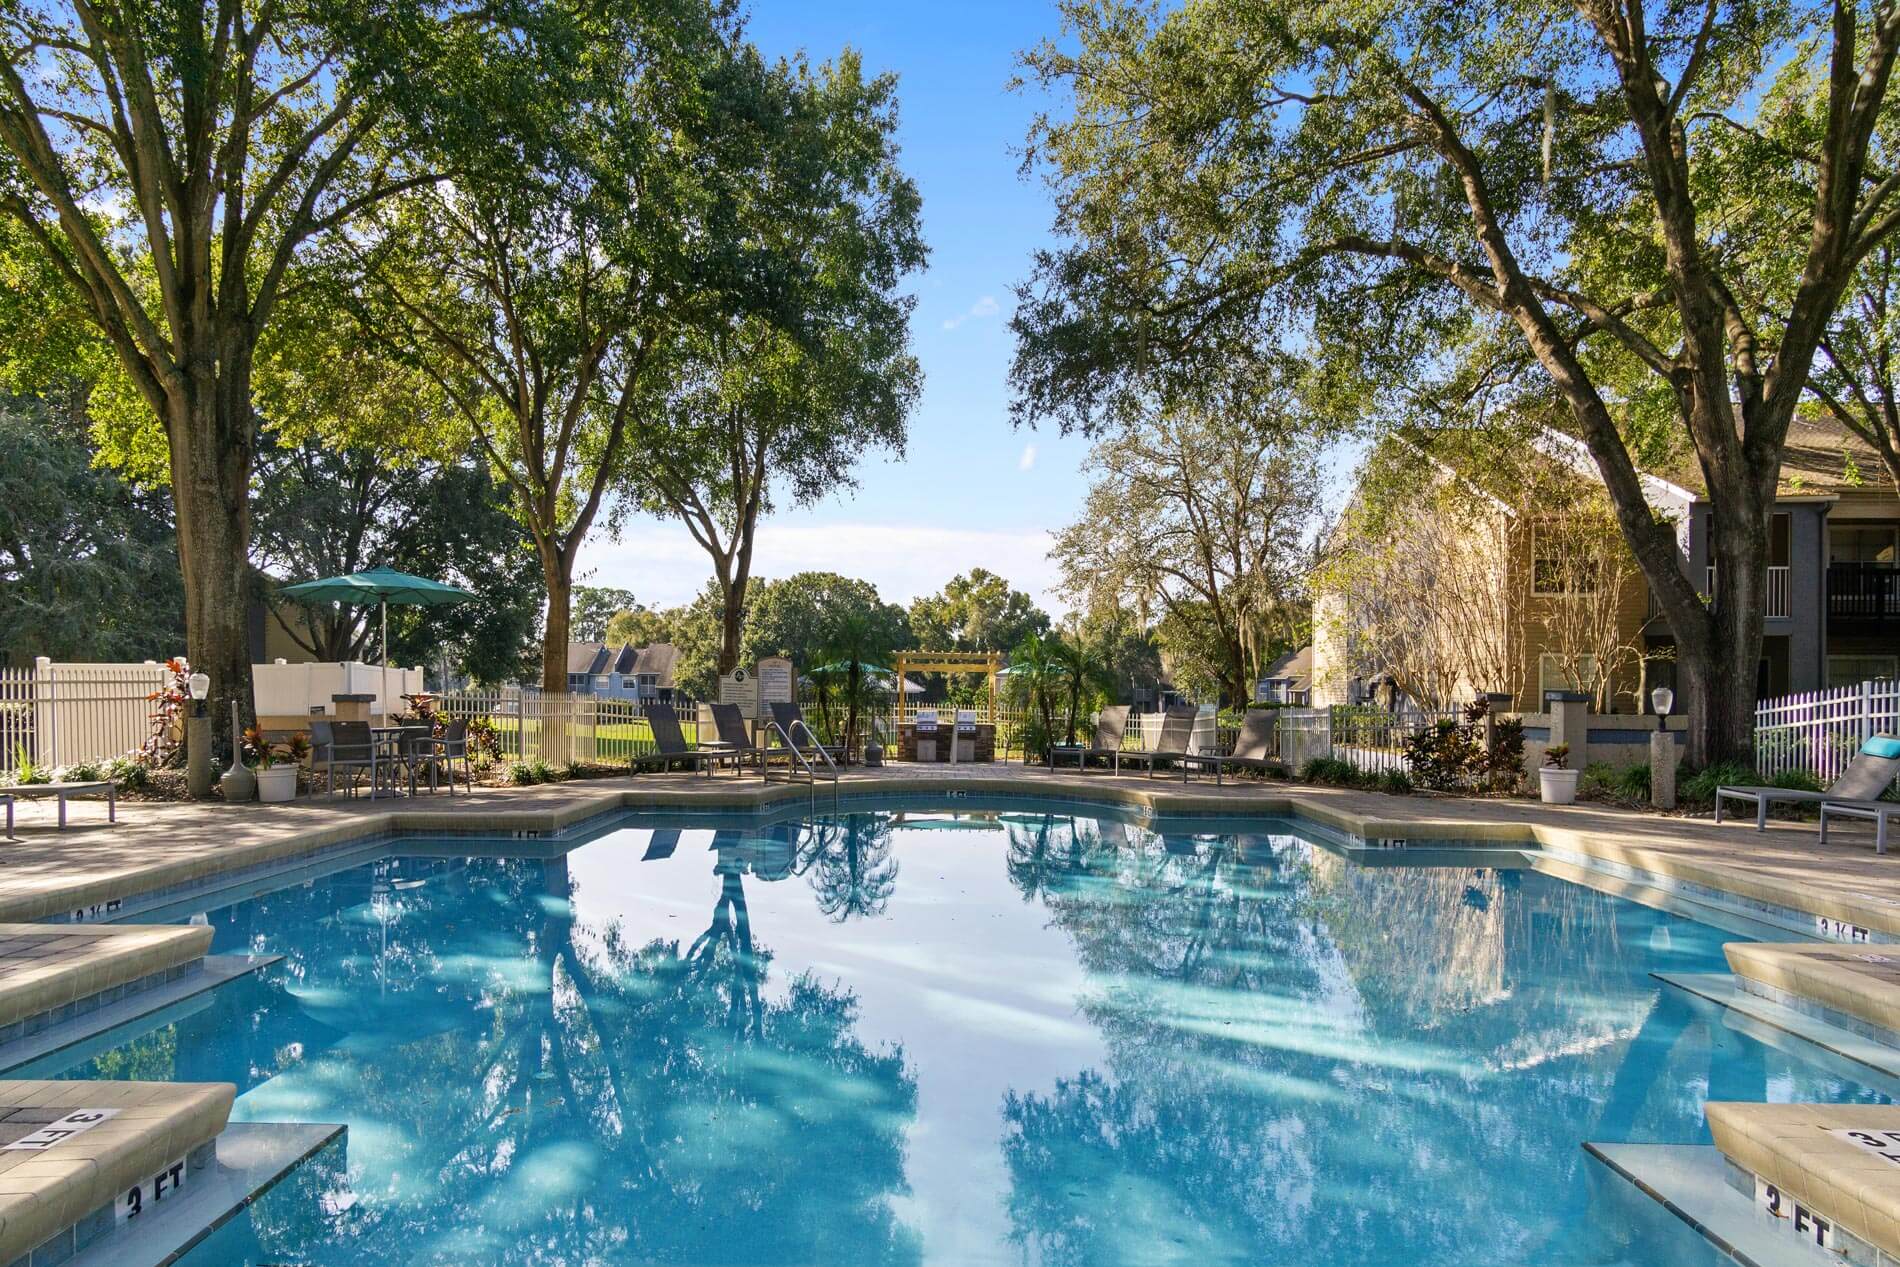 Lakewood Place pool